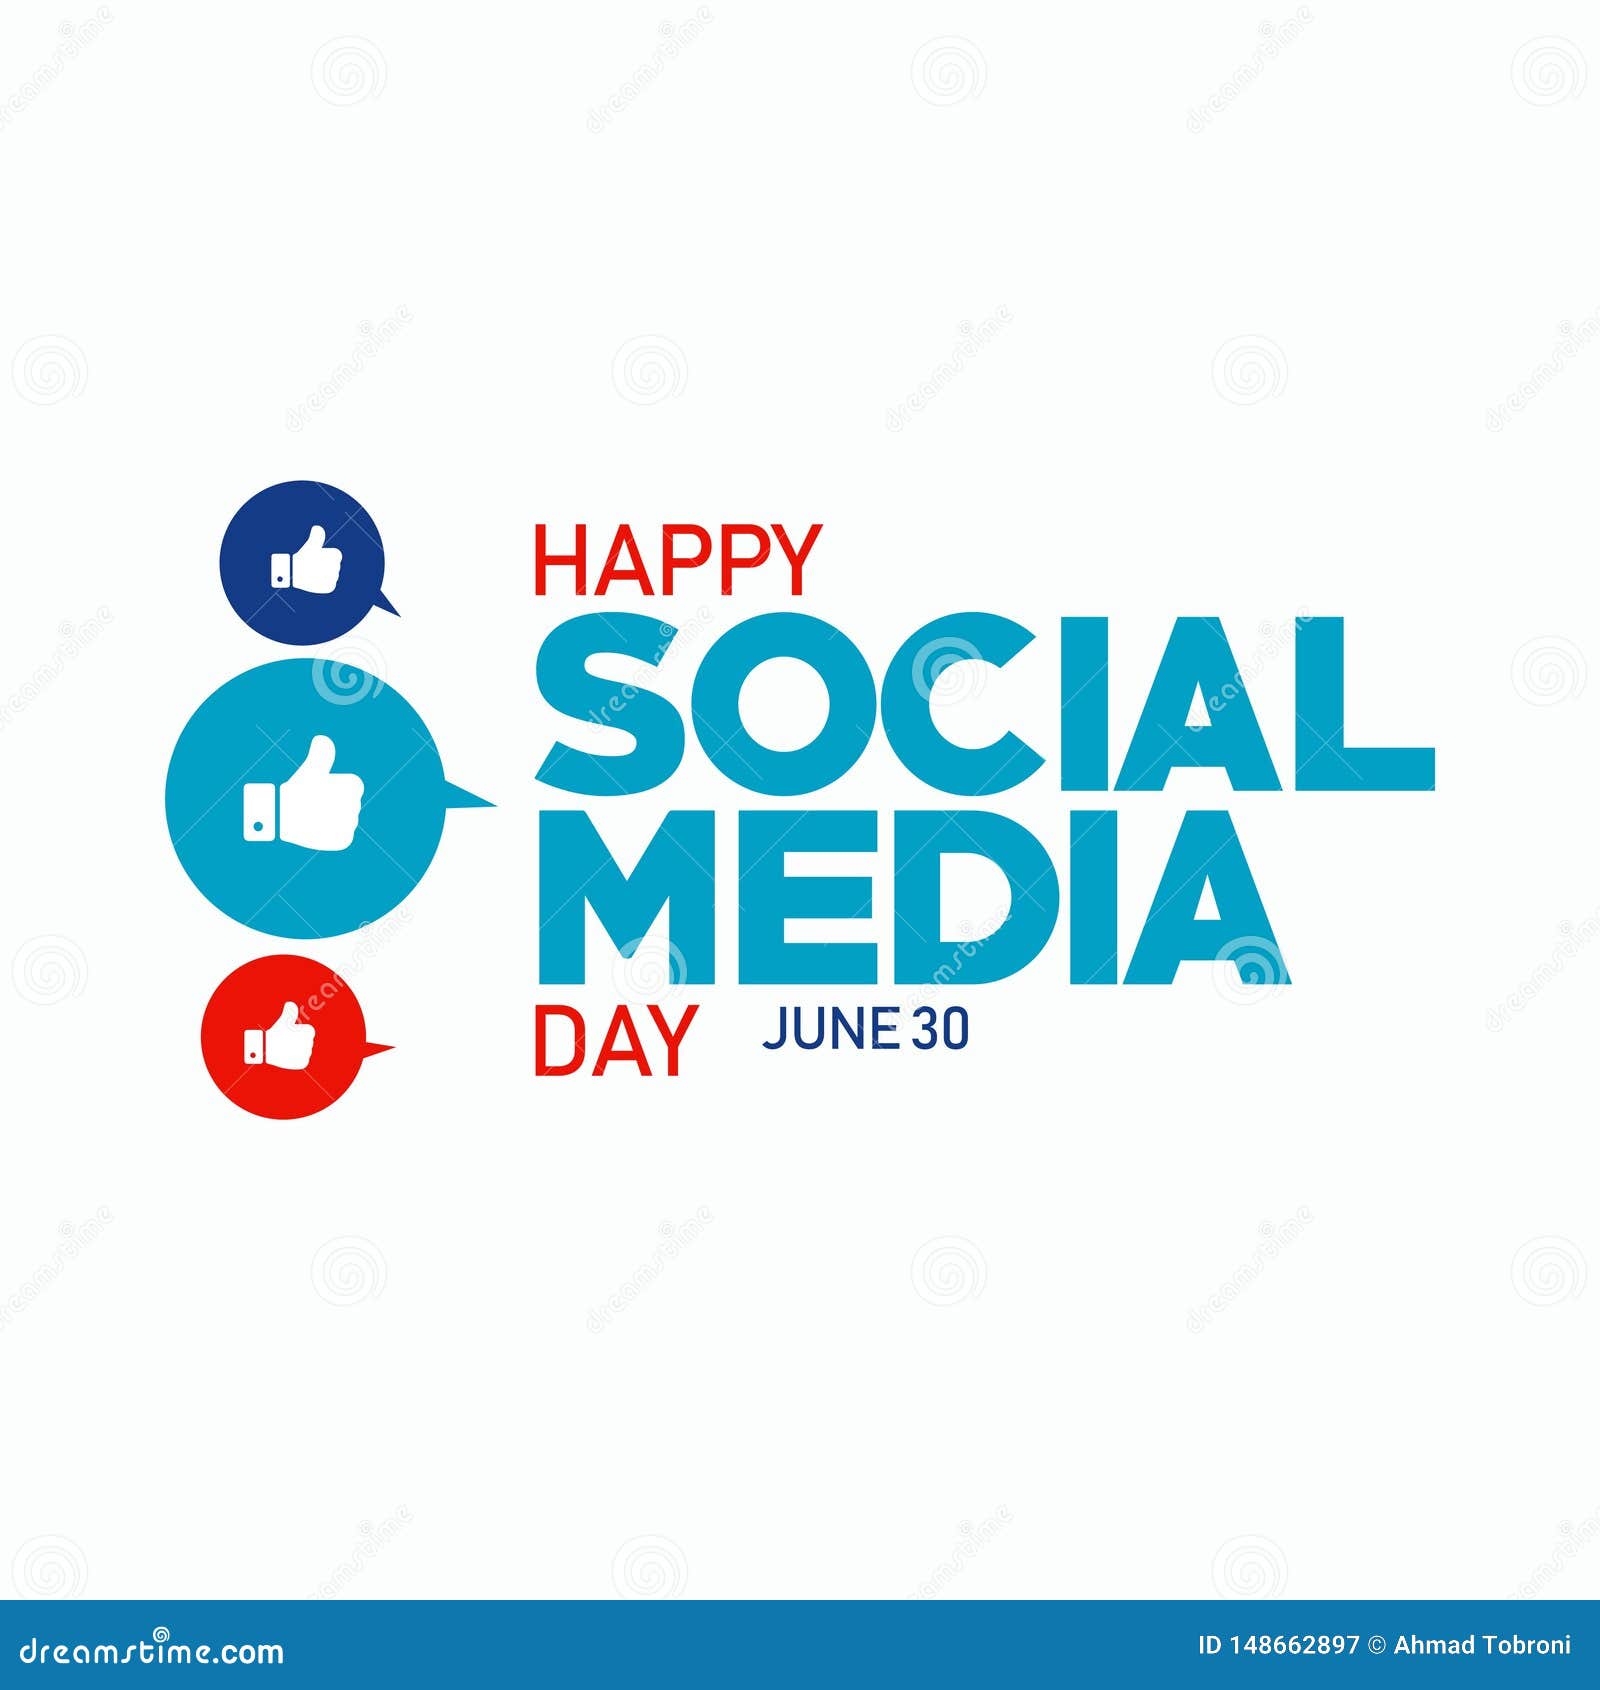 social-media-day-vector-background-icon-concept-illustration-balloons-emoji-happy-hand-design-mobile-flying-symbol-set-celebration-148662897.jpg